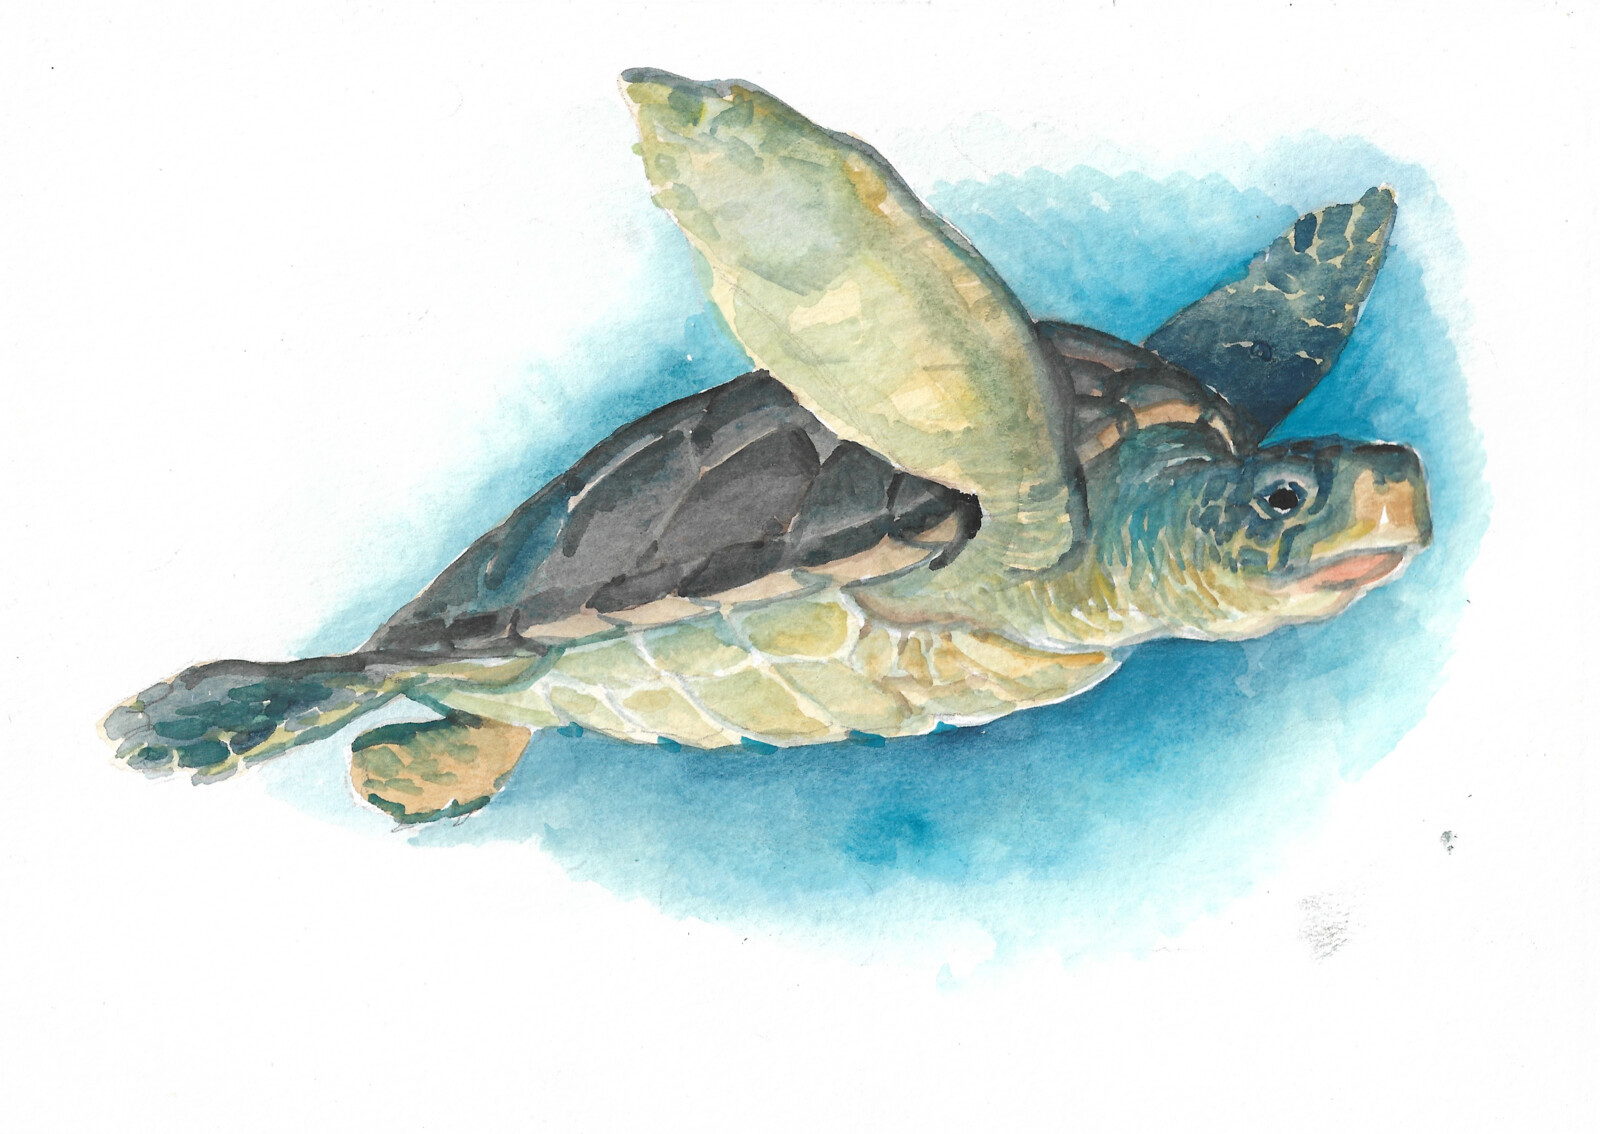 A turtle study